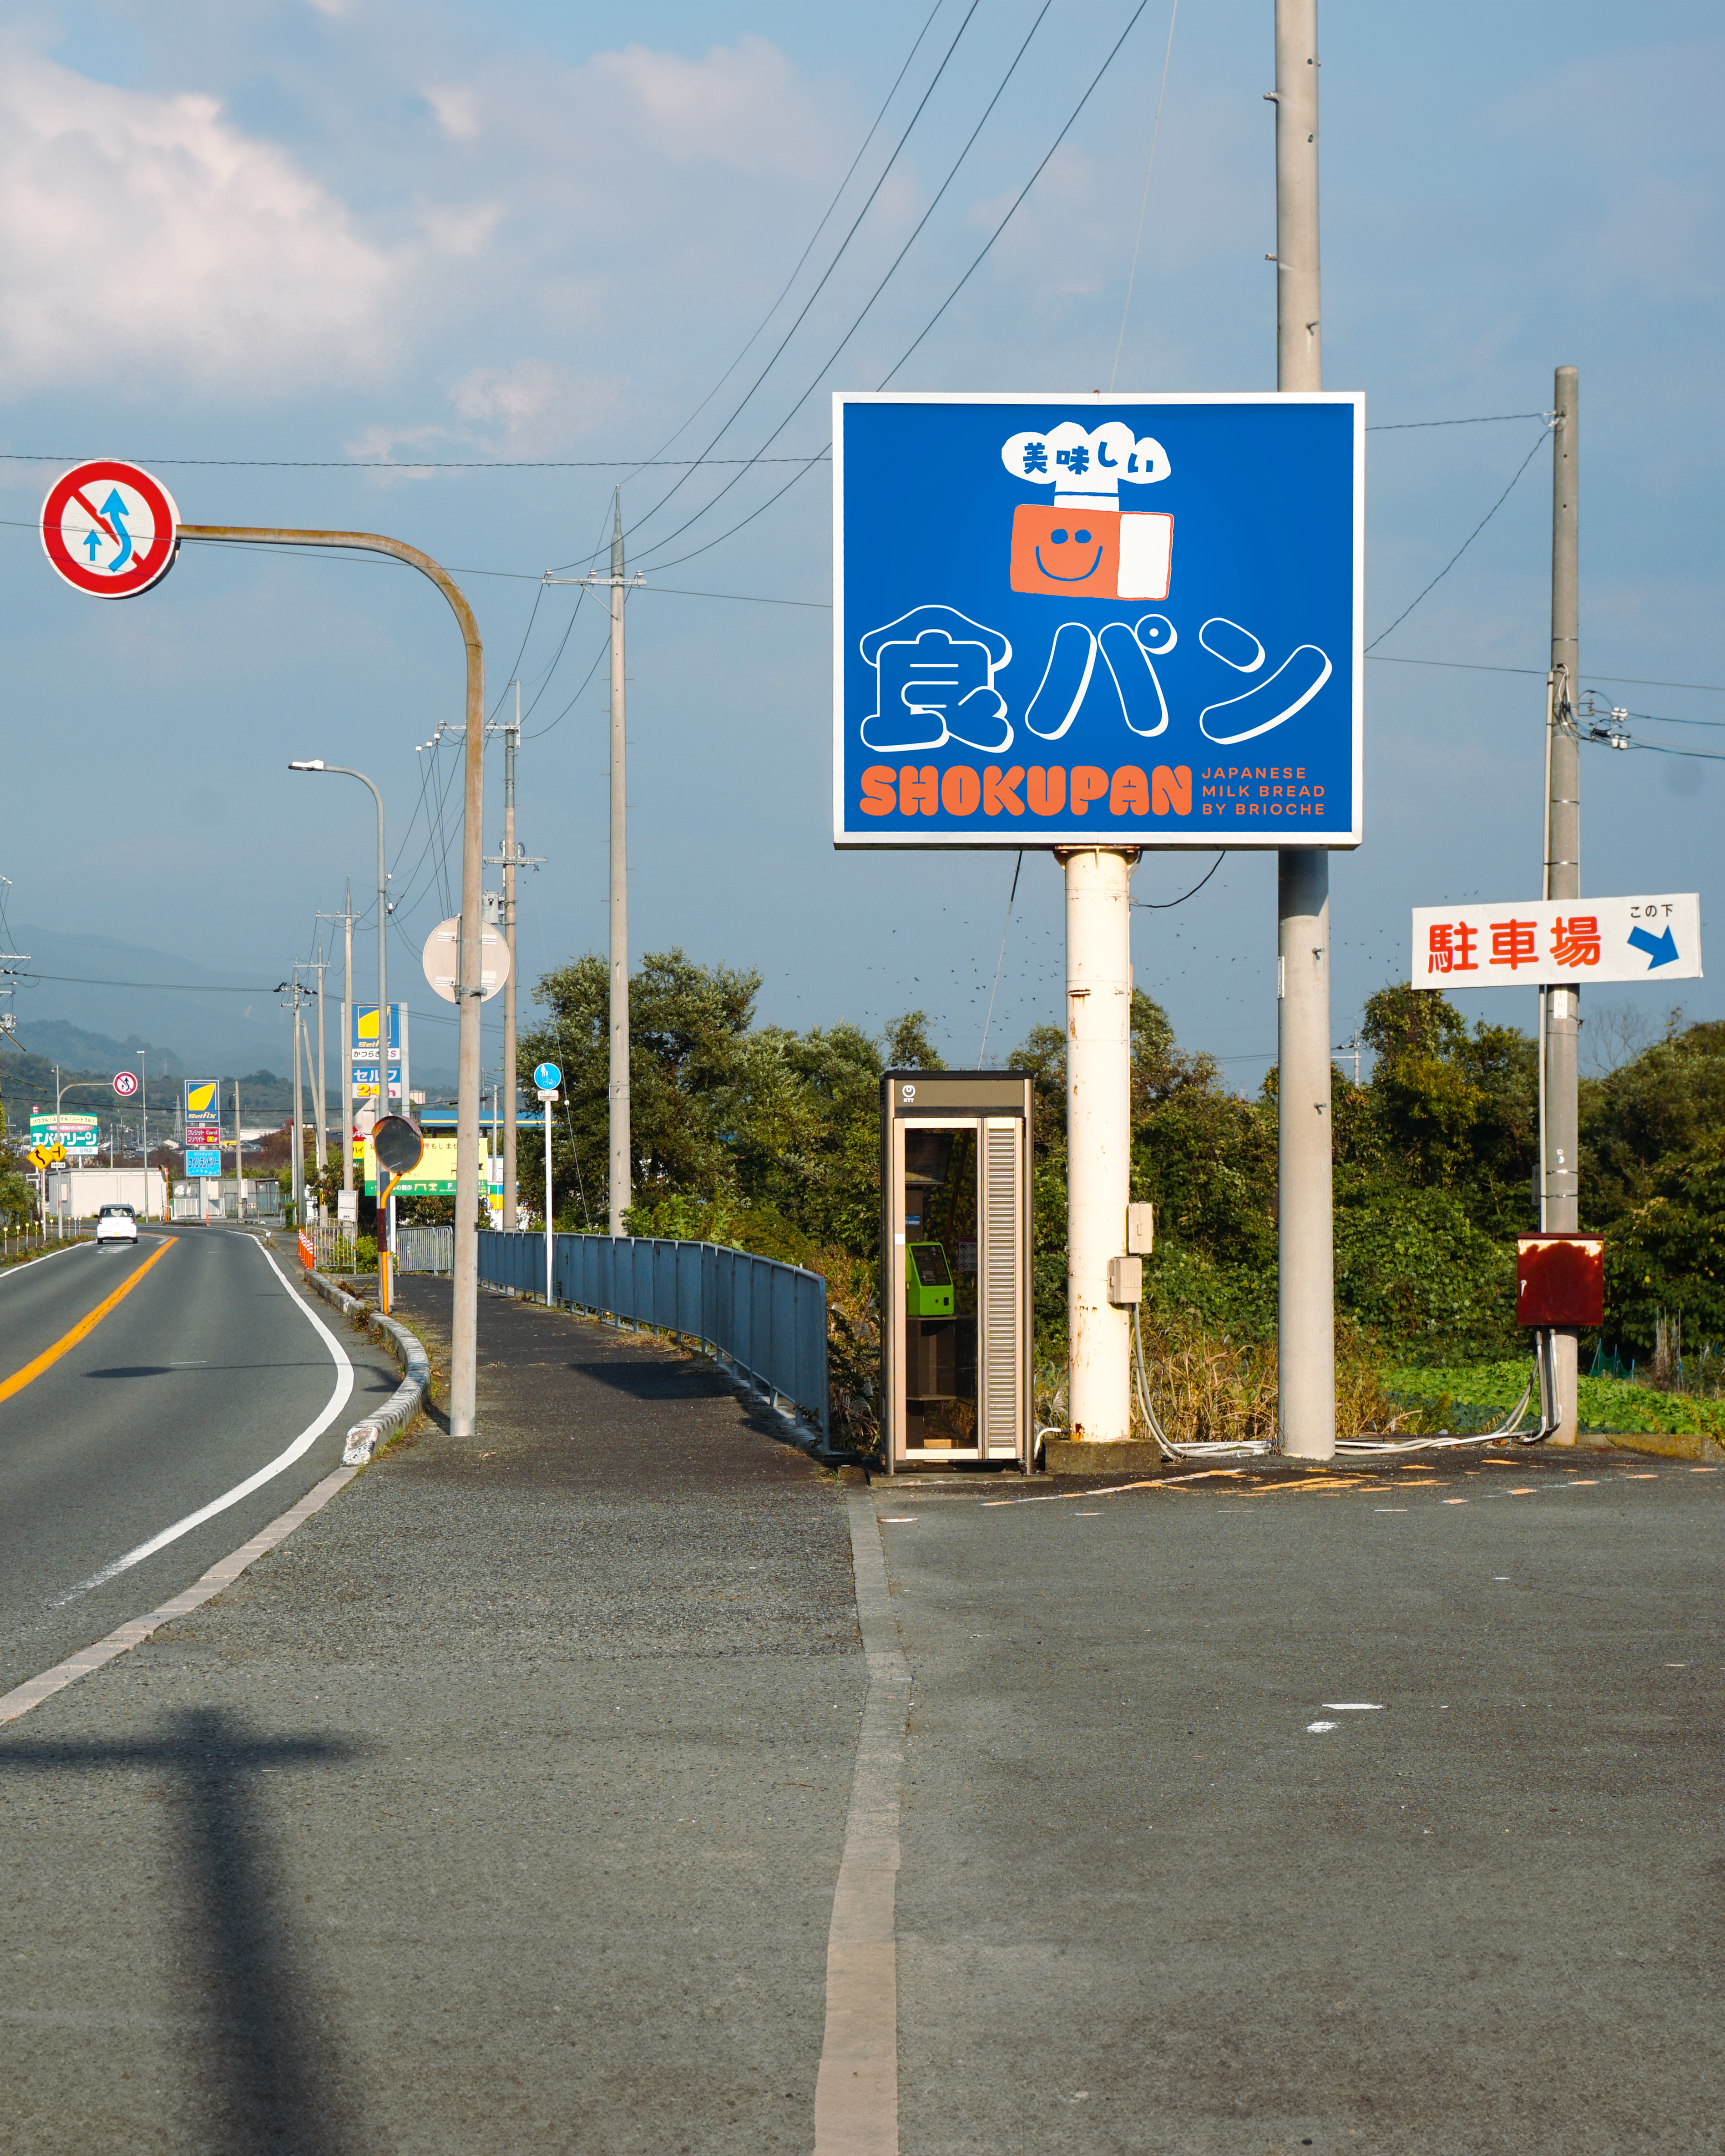 Shokupan signage in rural Japan